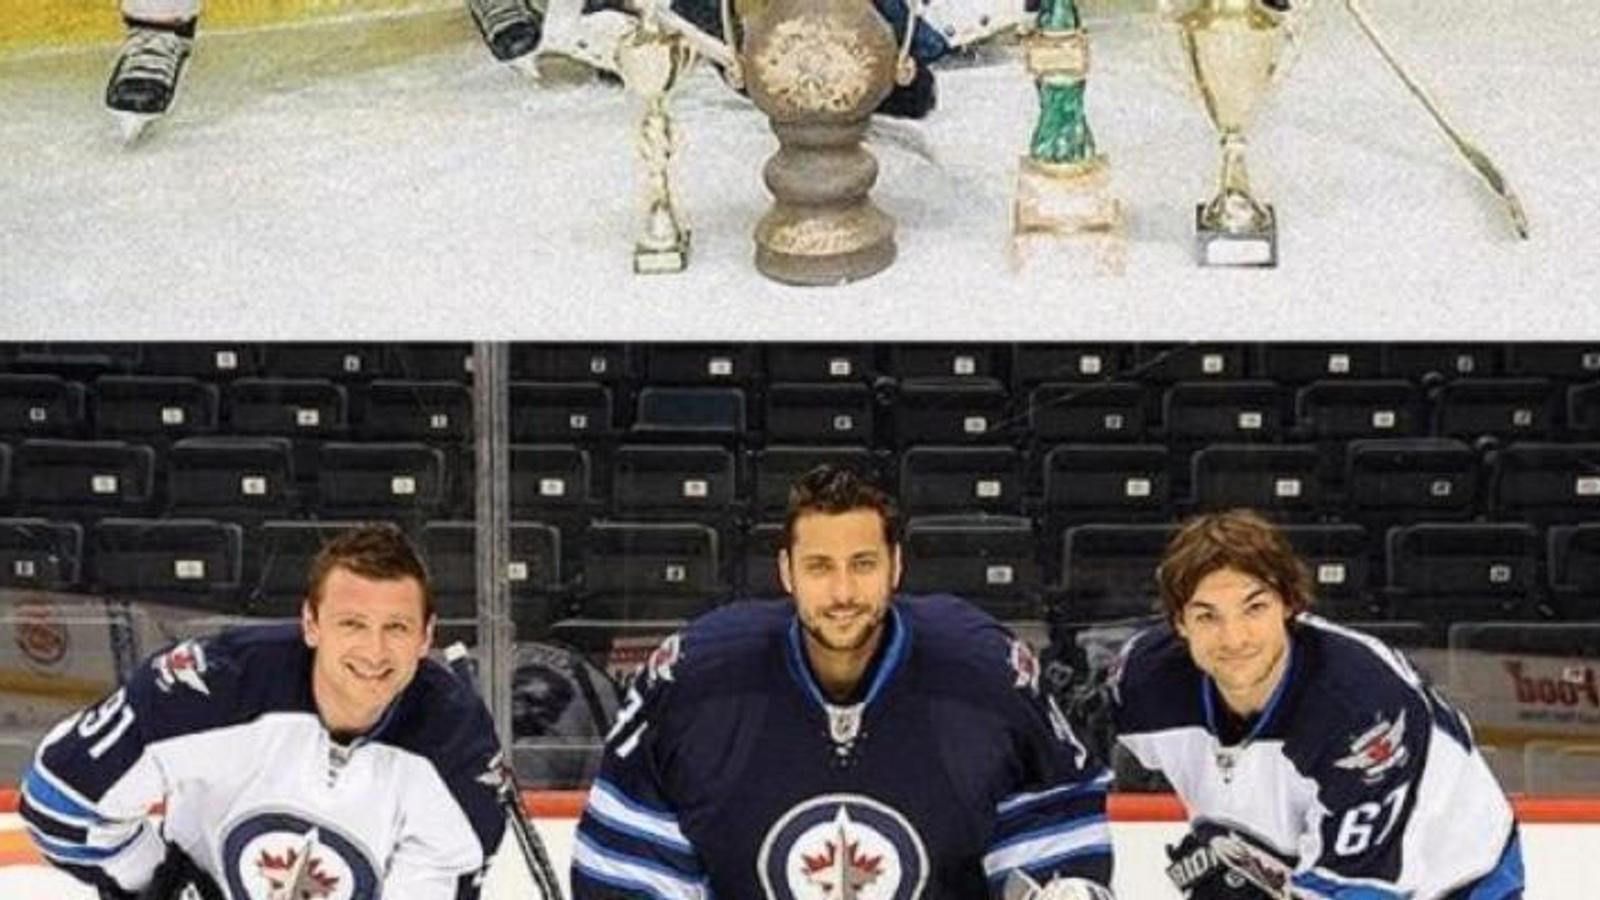 (Photos): Three NHL teammates recreate a photo from their childhood.